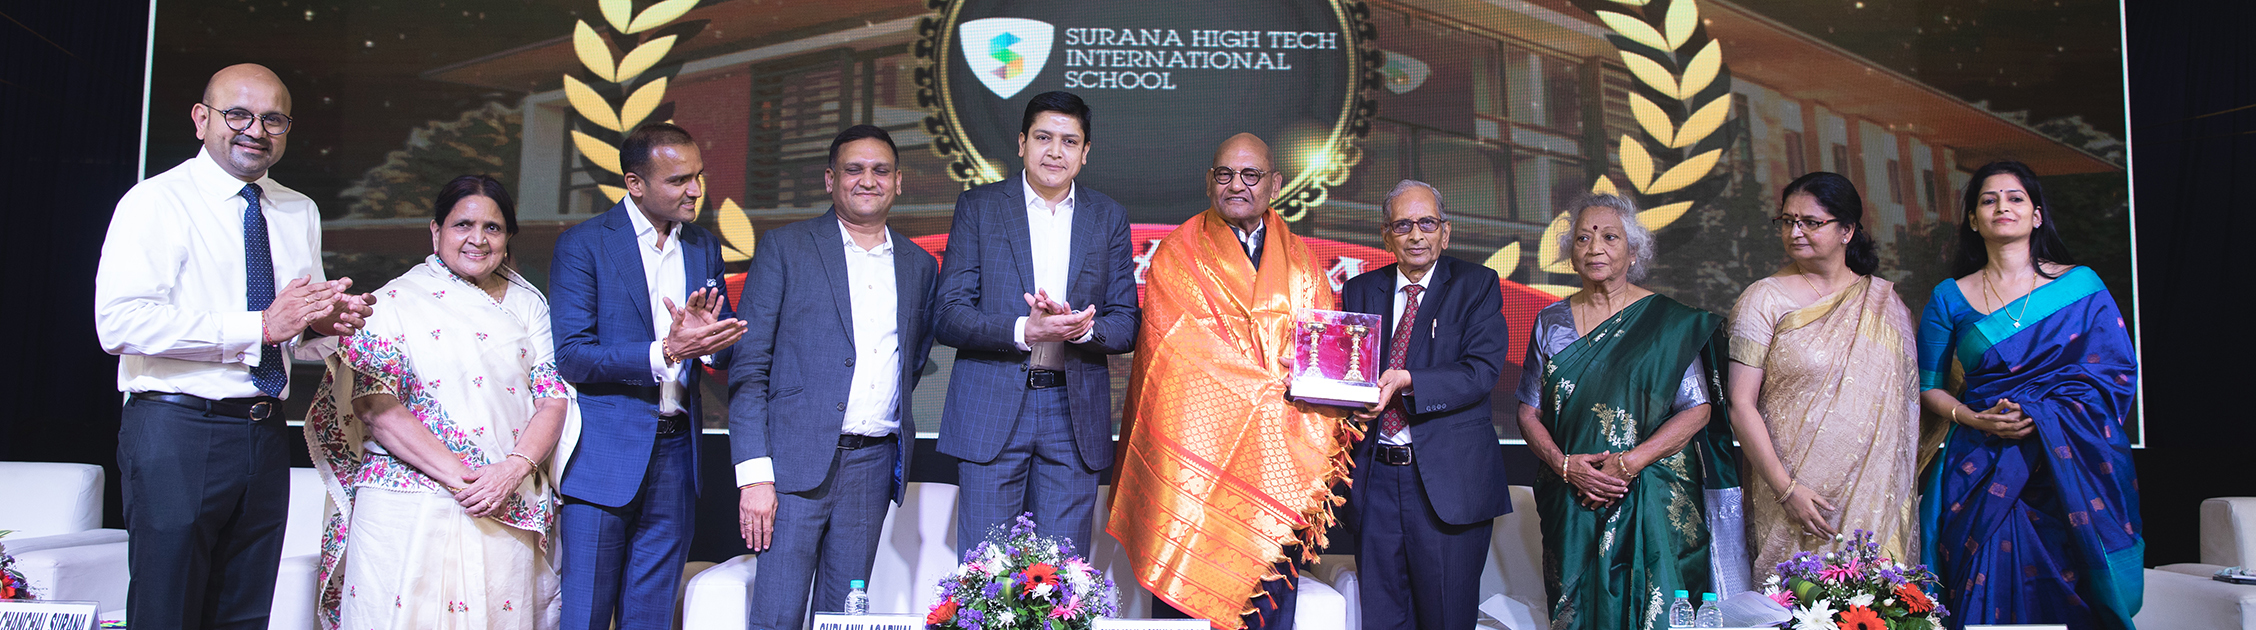 Inauguration of Surana High Tech International